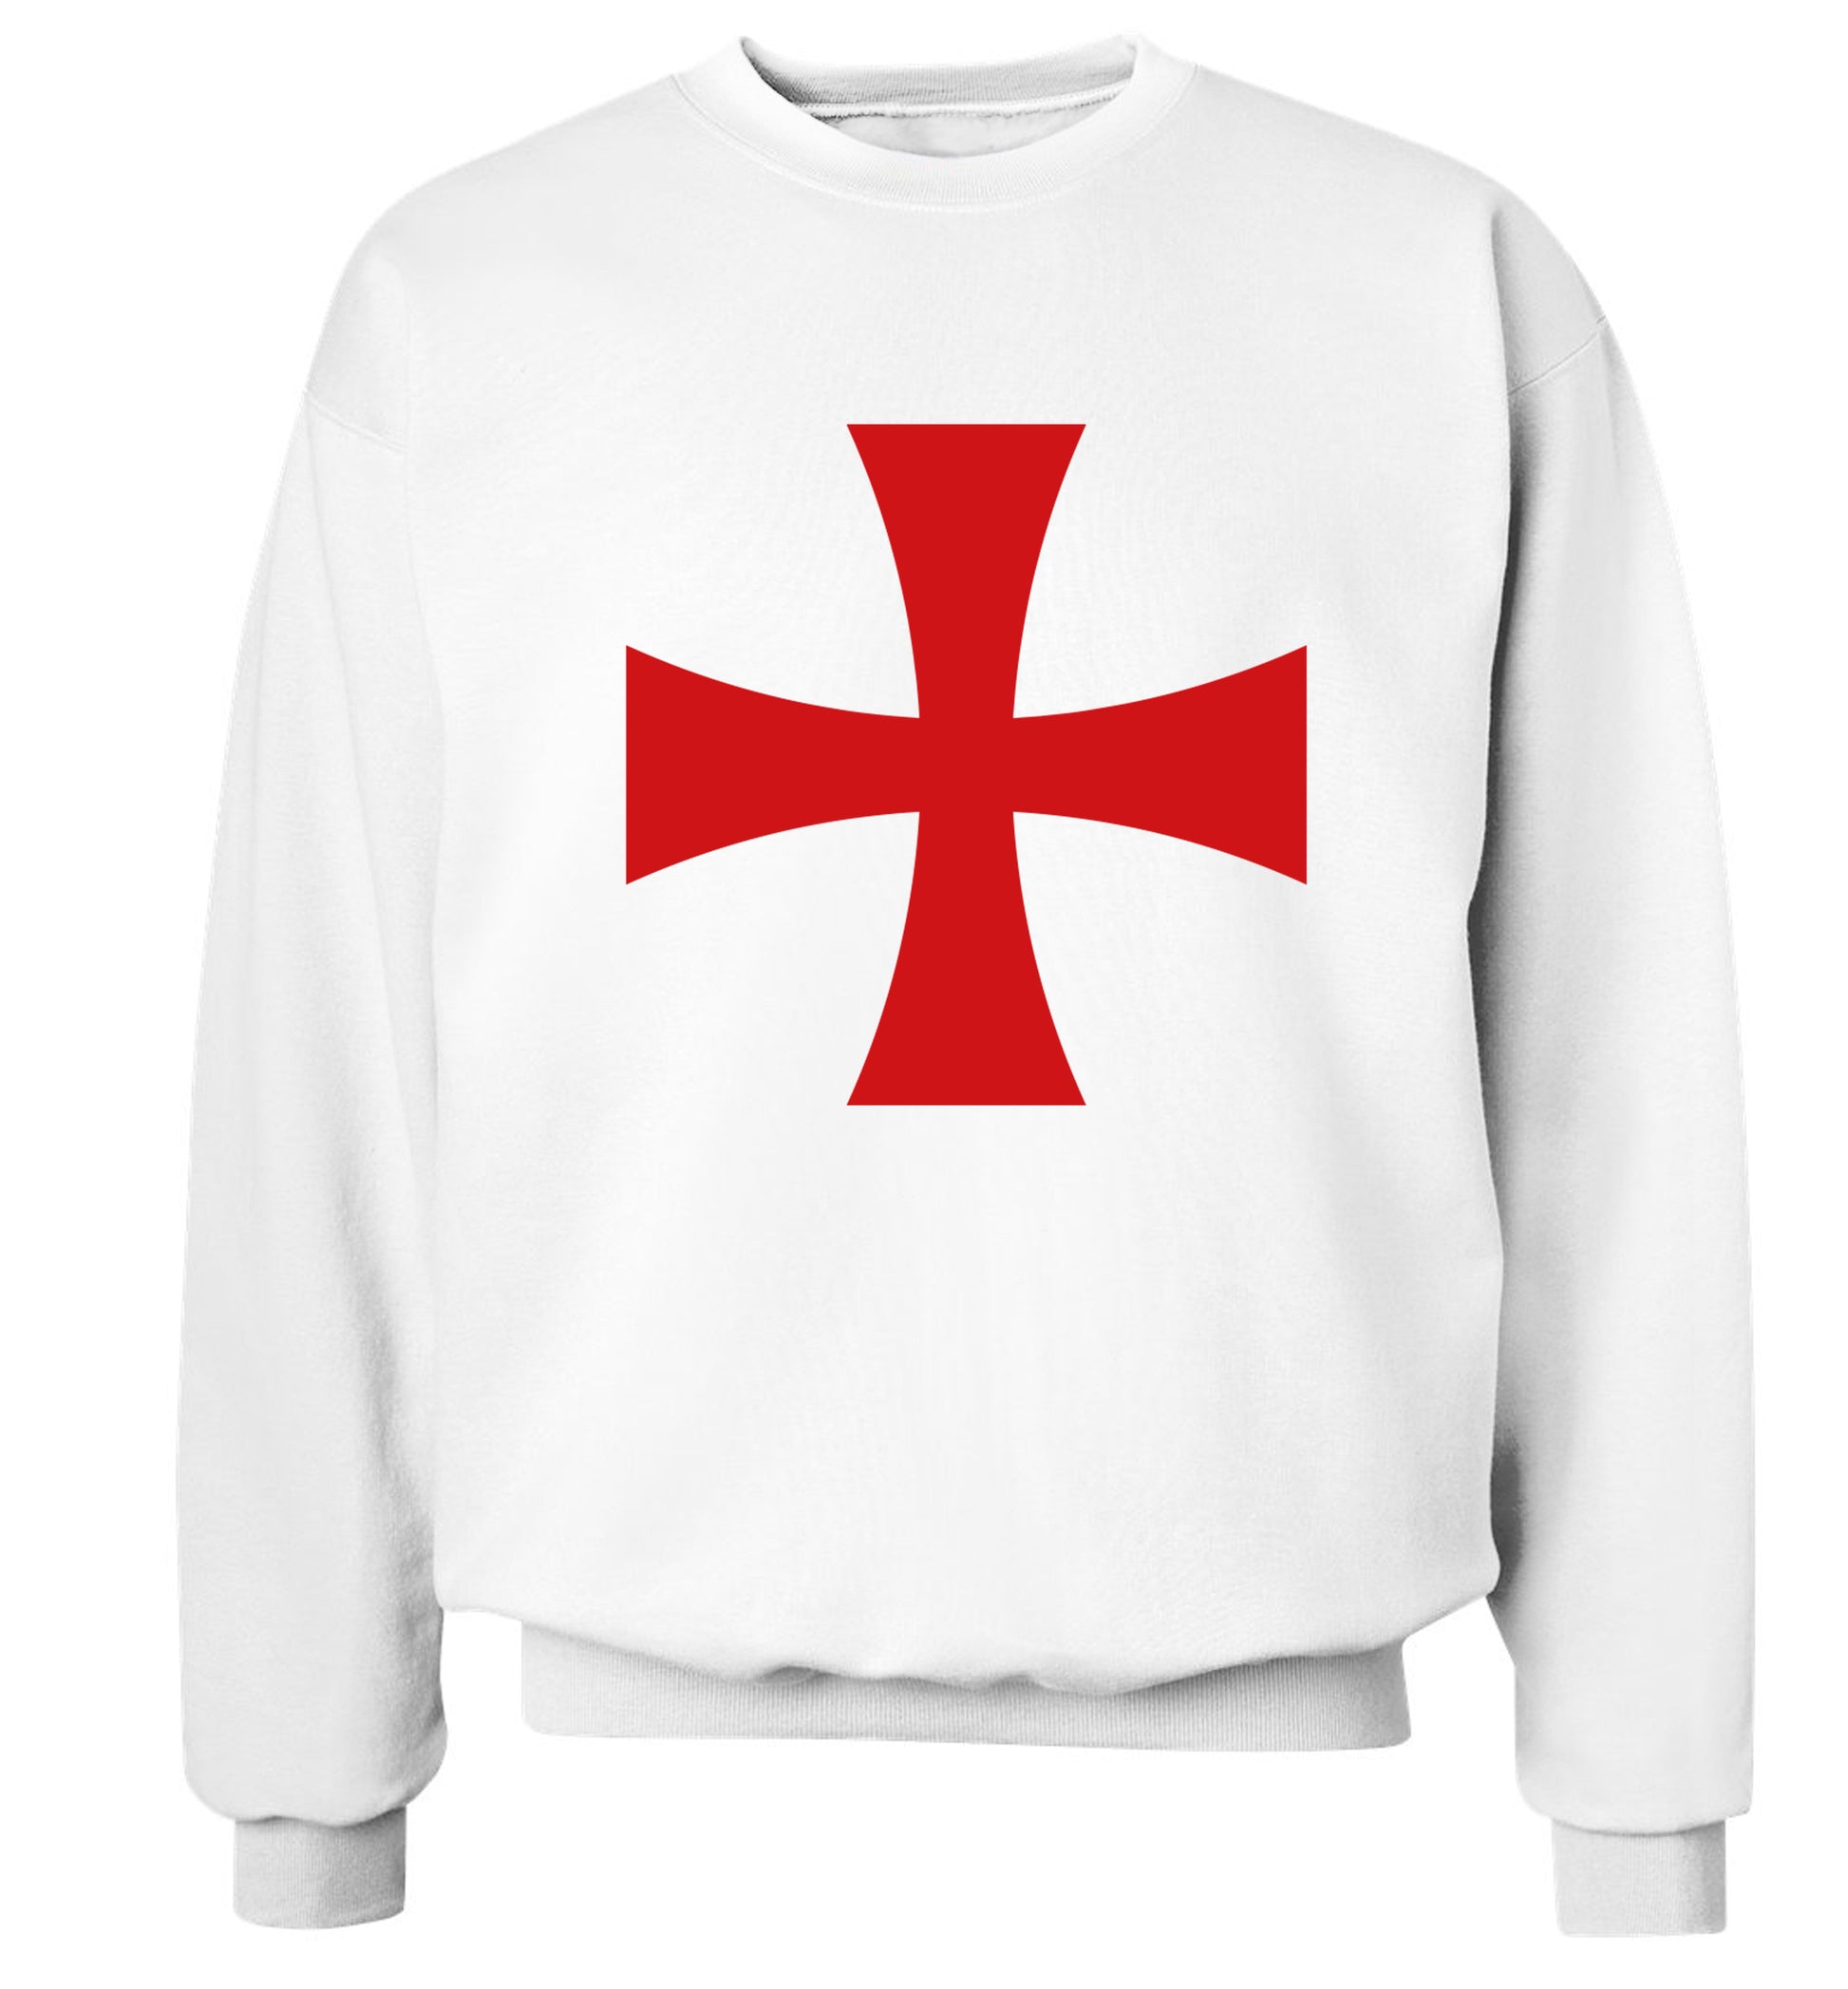 Knights Templar cross Adult's unisex white Sweater 2XL